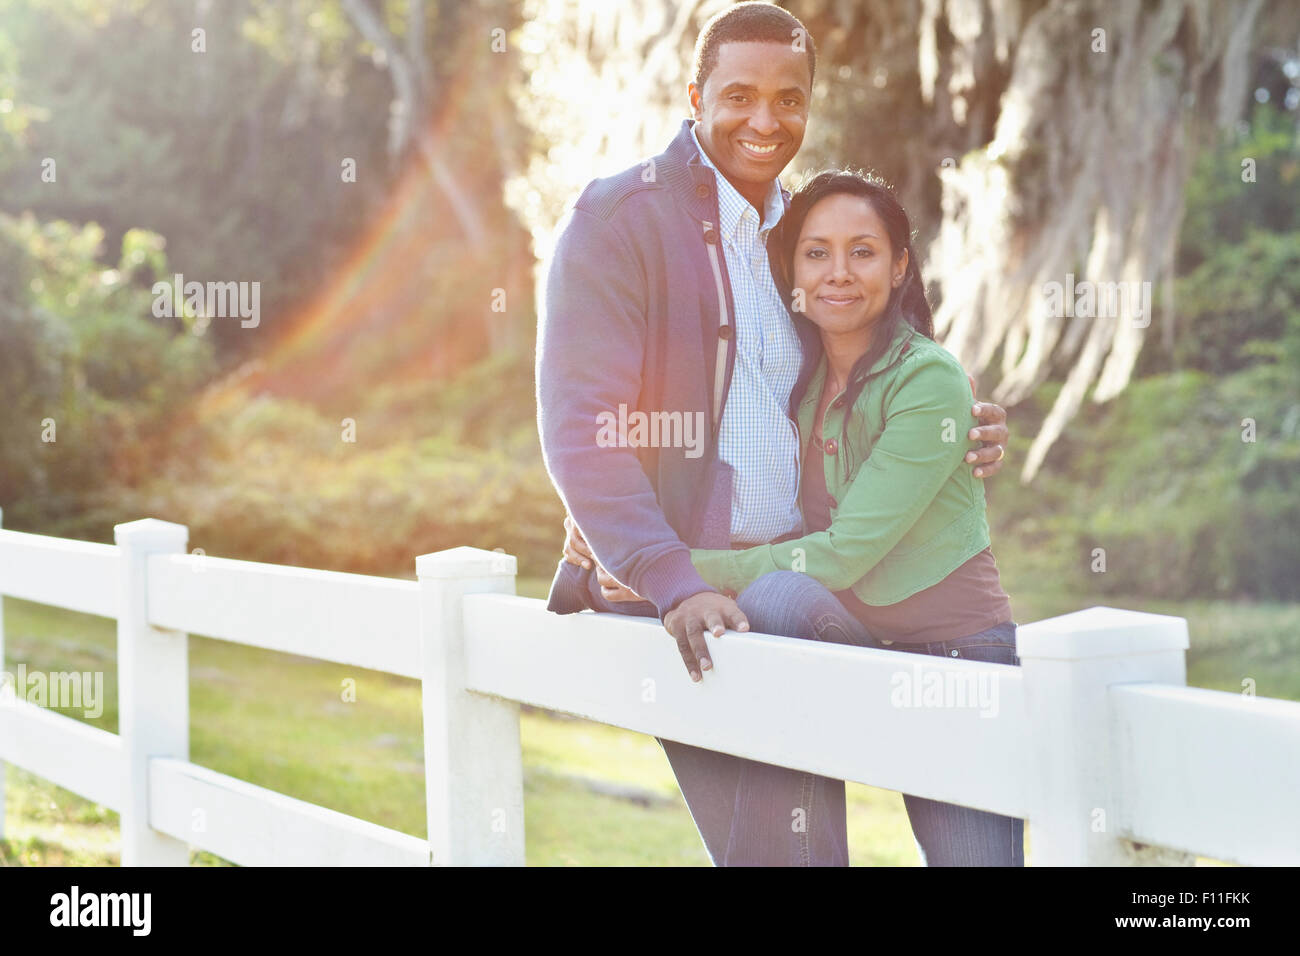 Smiling couple leaning on fence Stock Photo